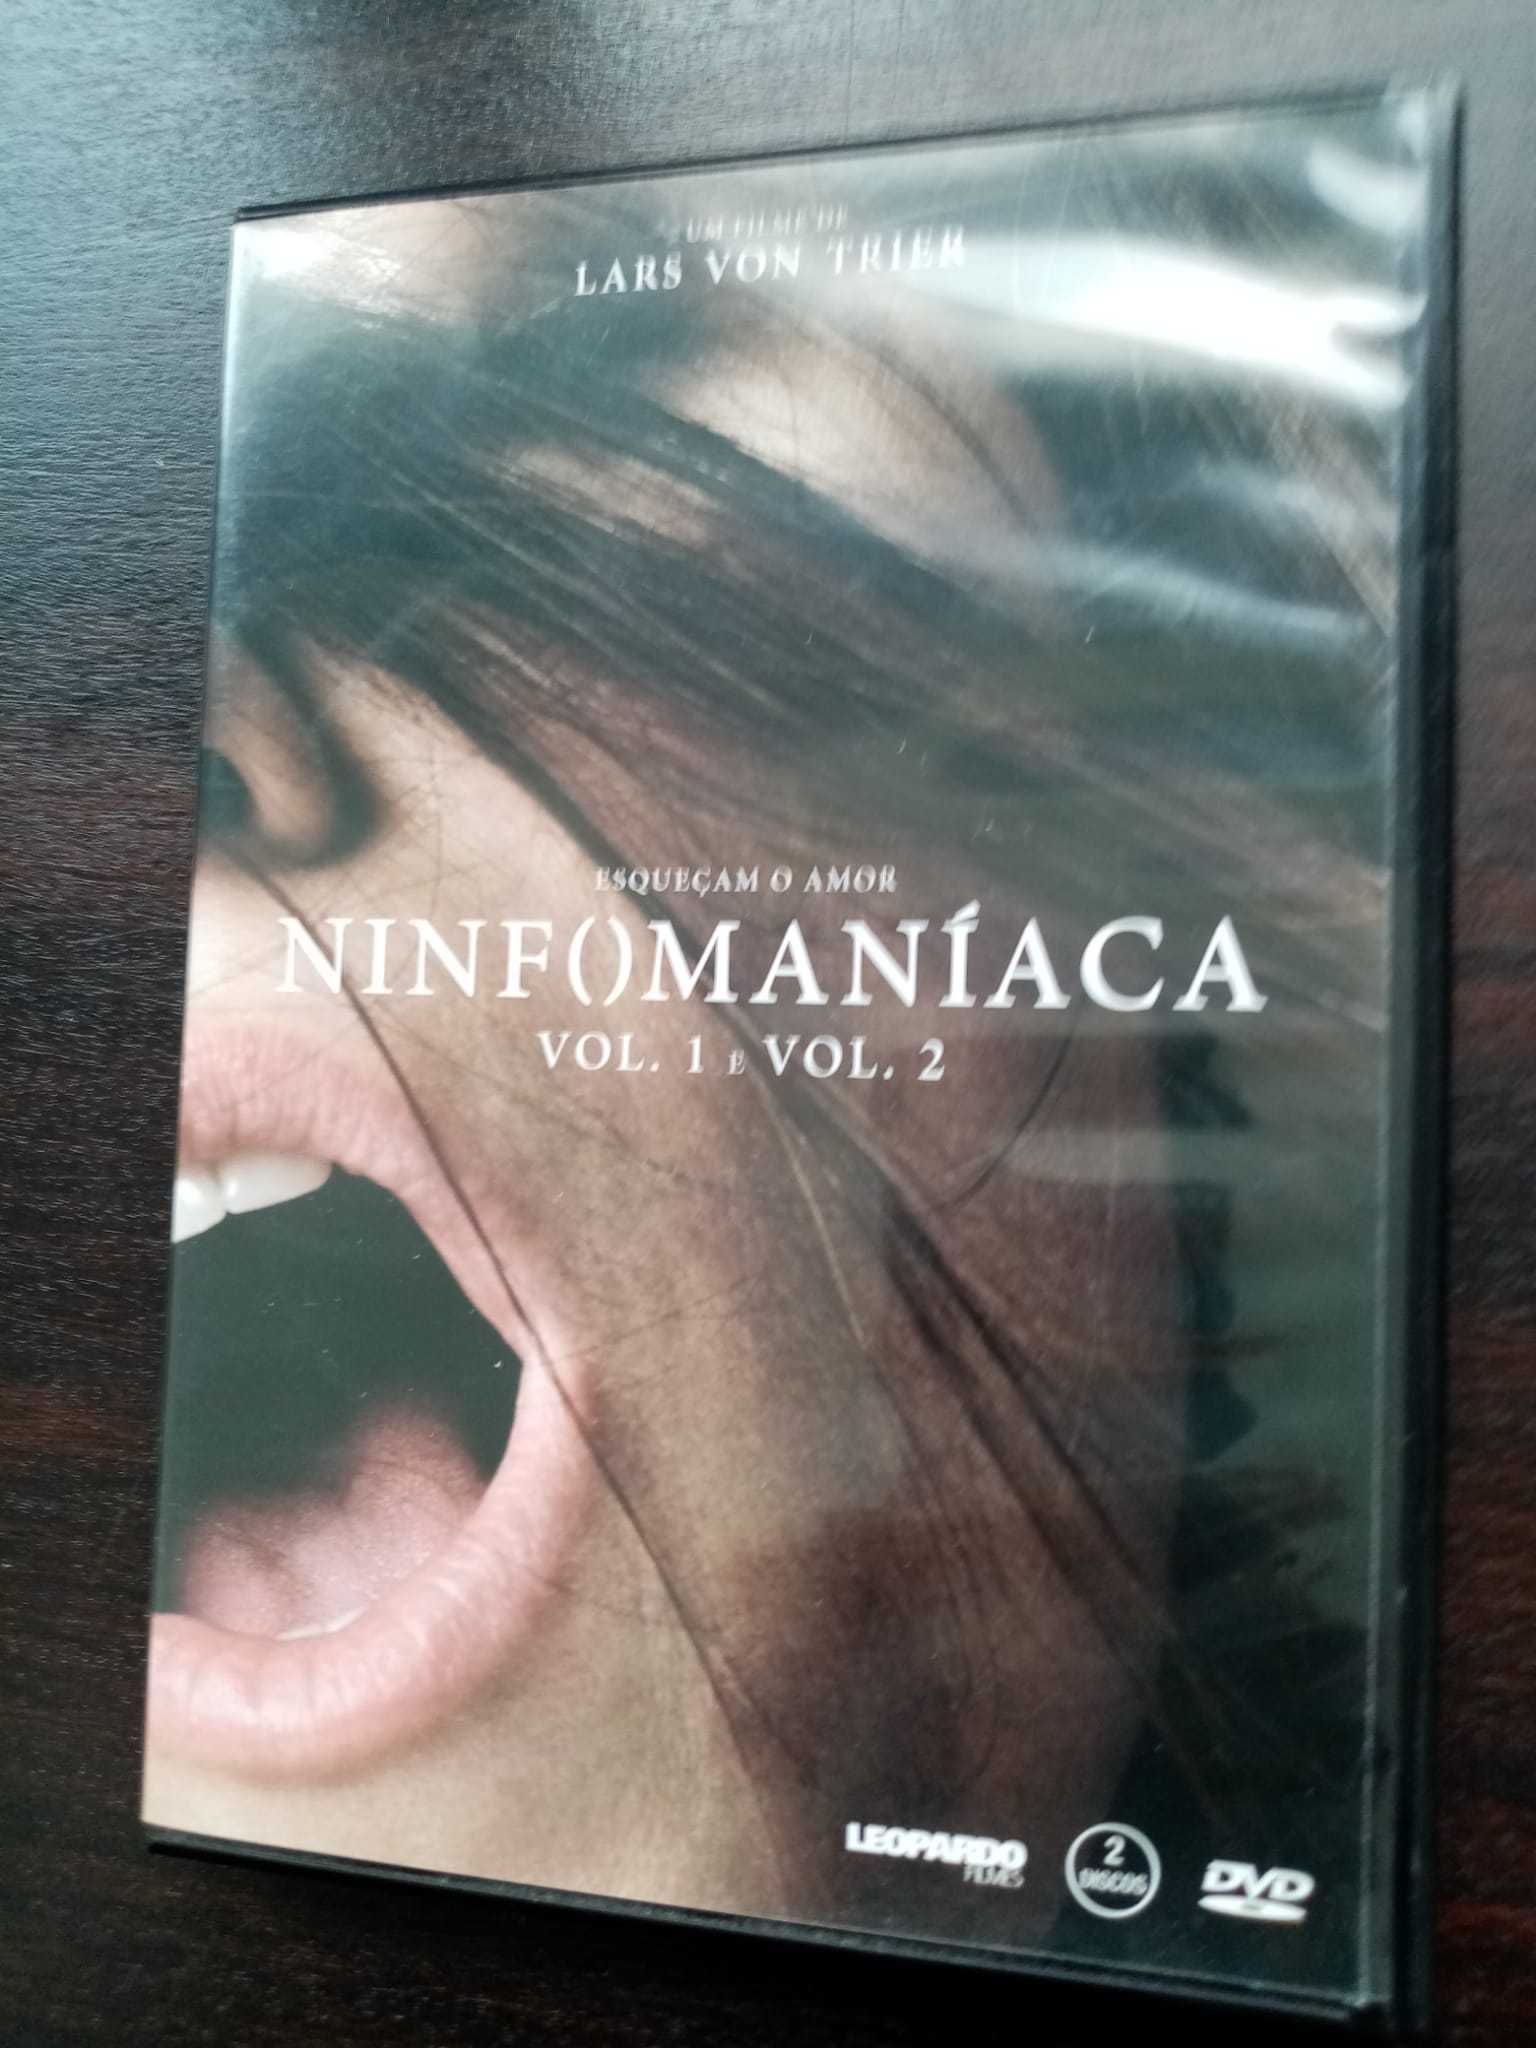 raro dvd: Lars Von Trier “Ninfomaníaca (Vol. 1 e Vol. 2)”